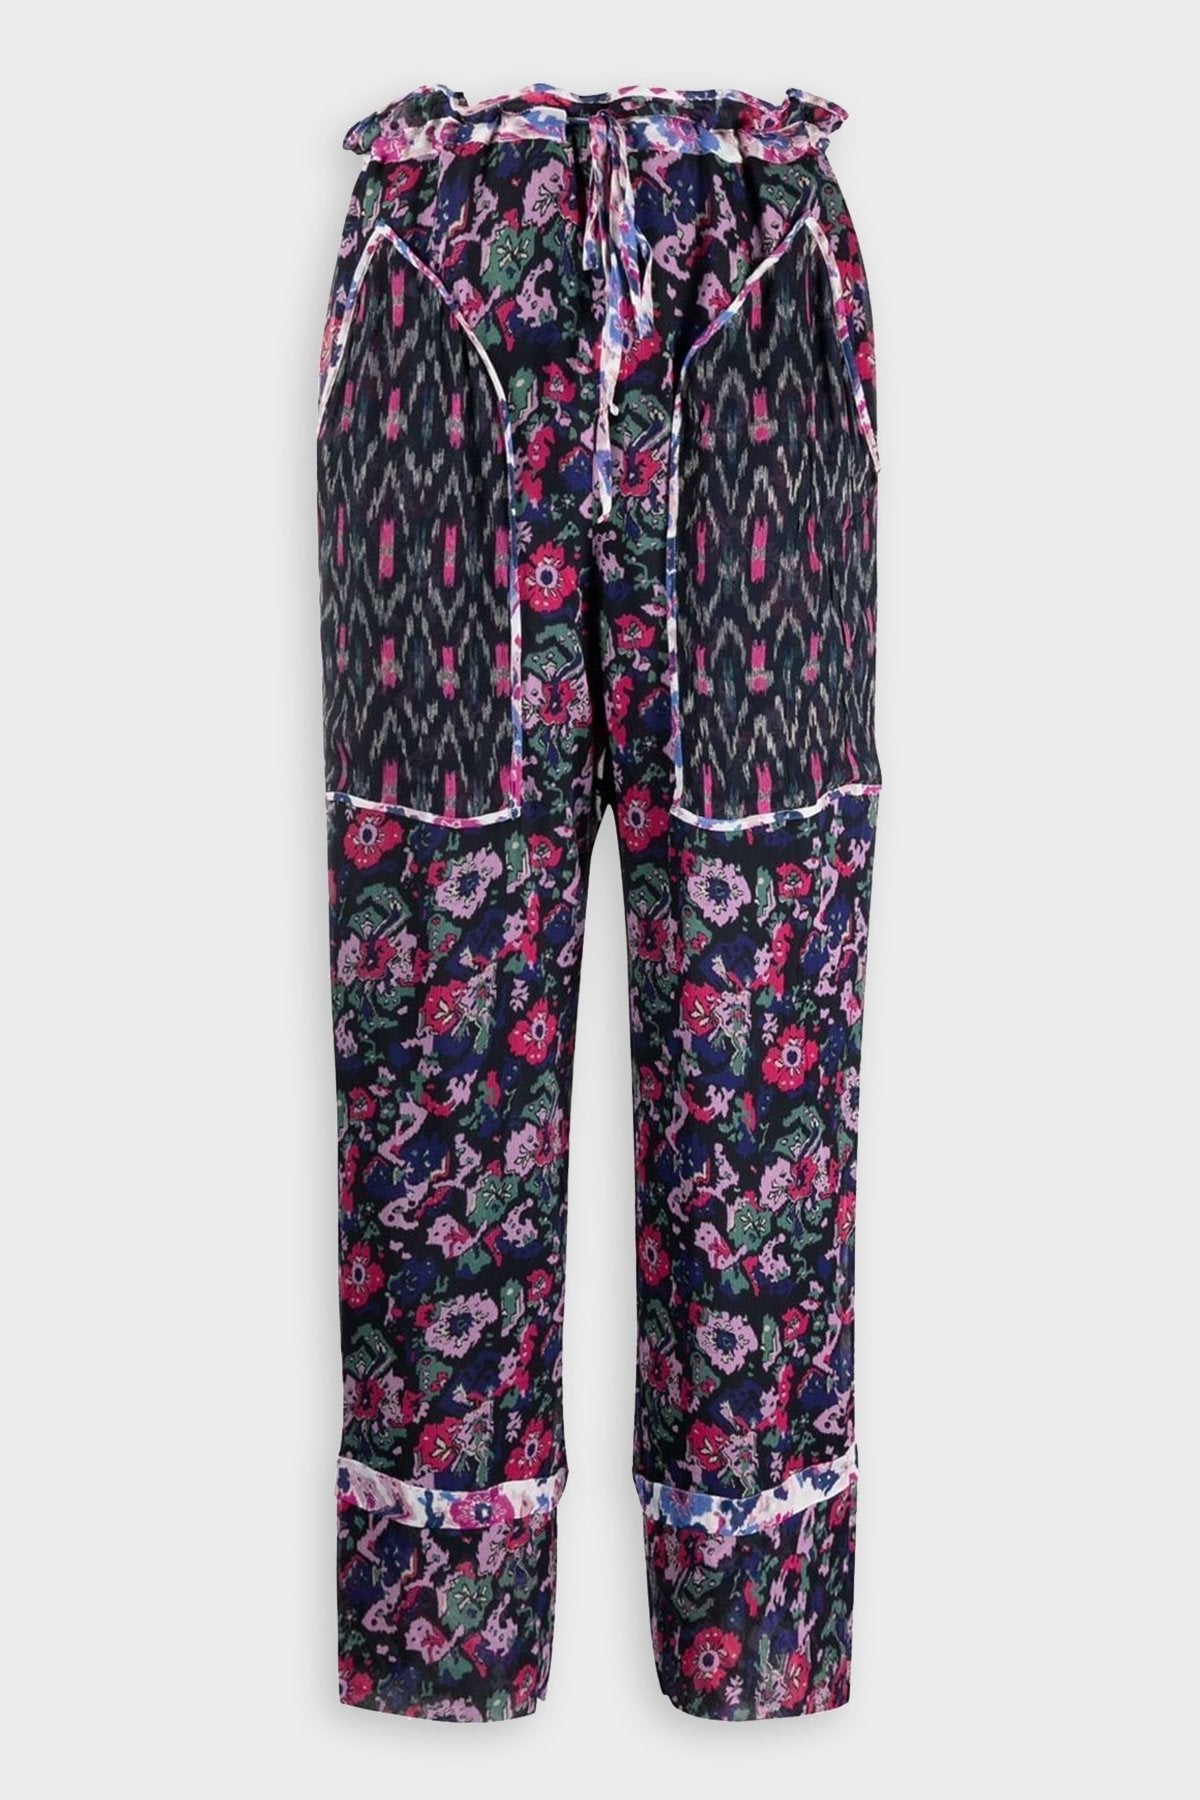 Ryama Pants in Faded Night - shop-olivia.com